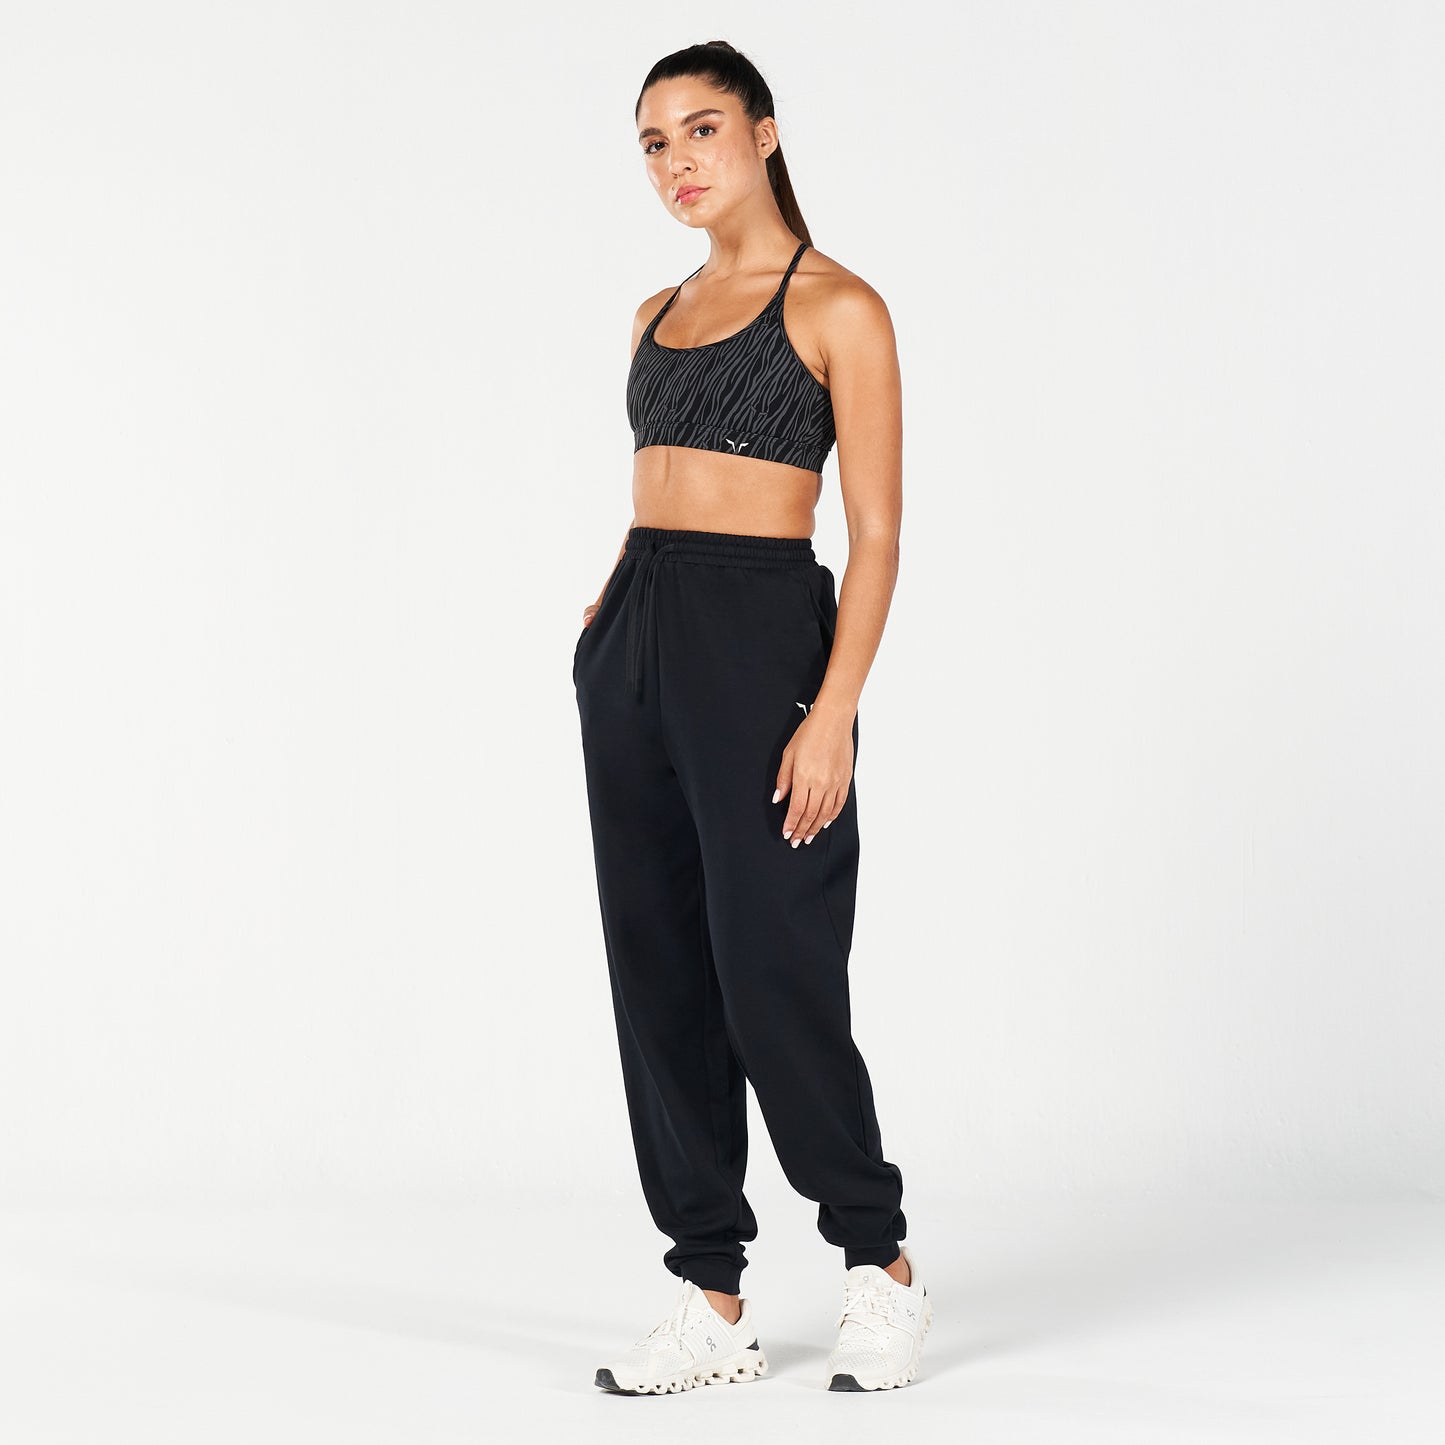 squatwolf-workout-clothes-core-oversized-sweatpants-black-gym-pants-for-women